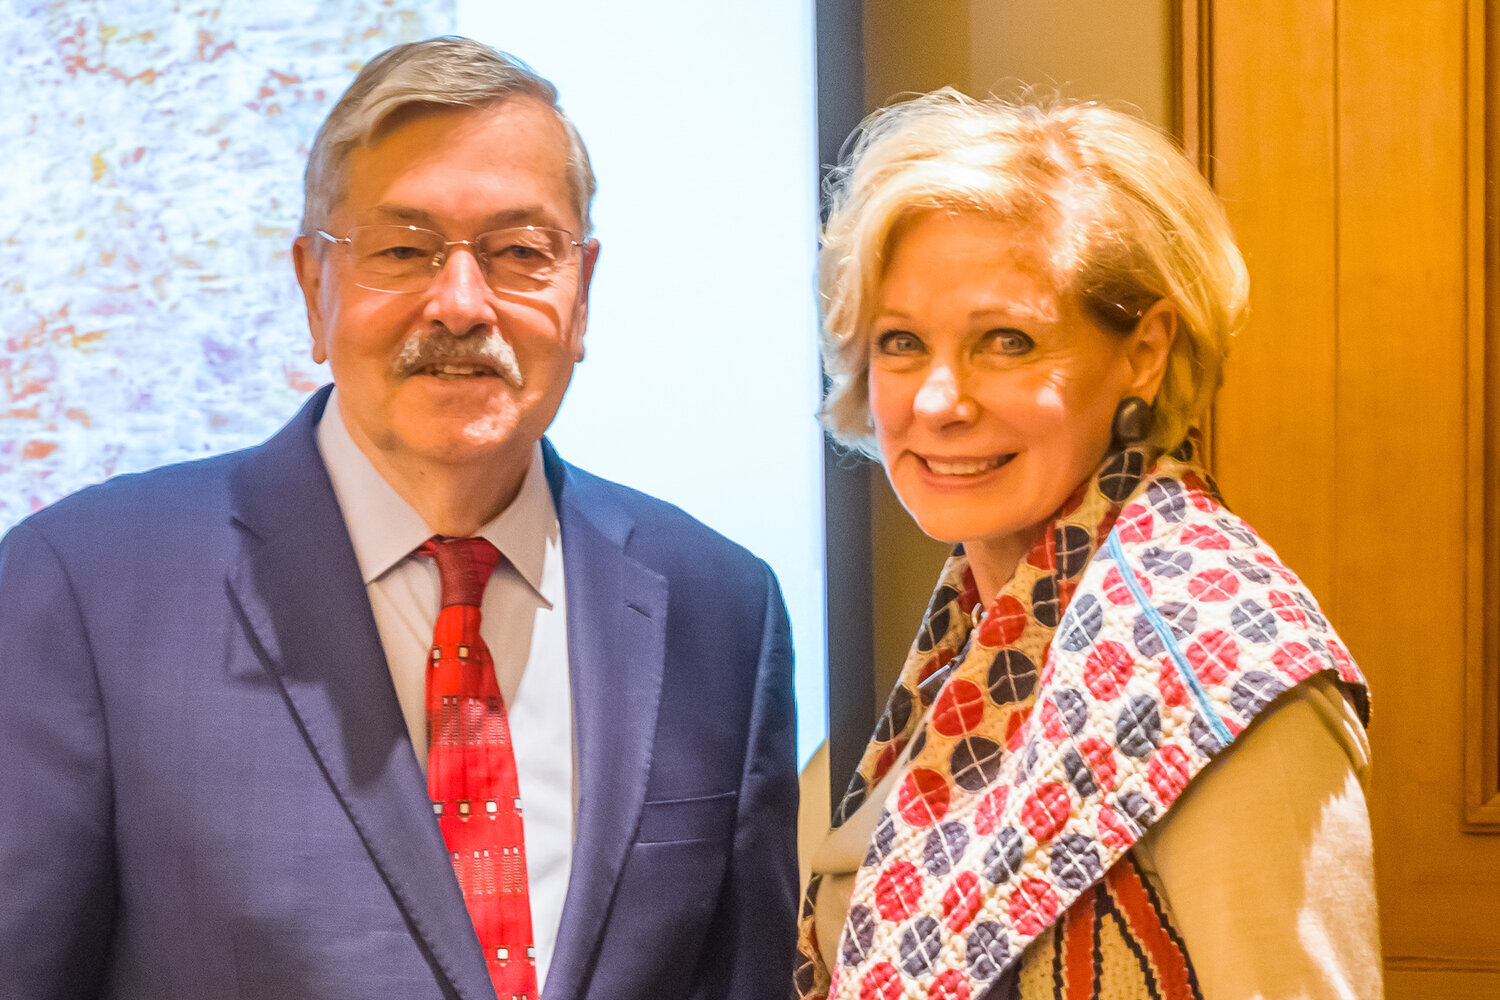 Ambassador Branstad with Susan